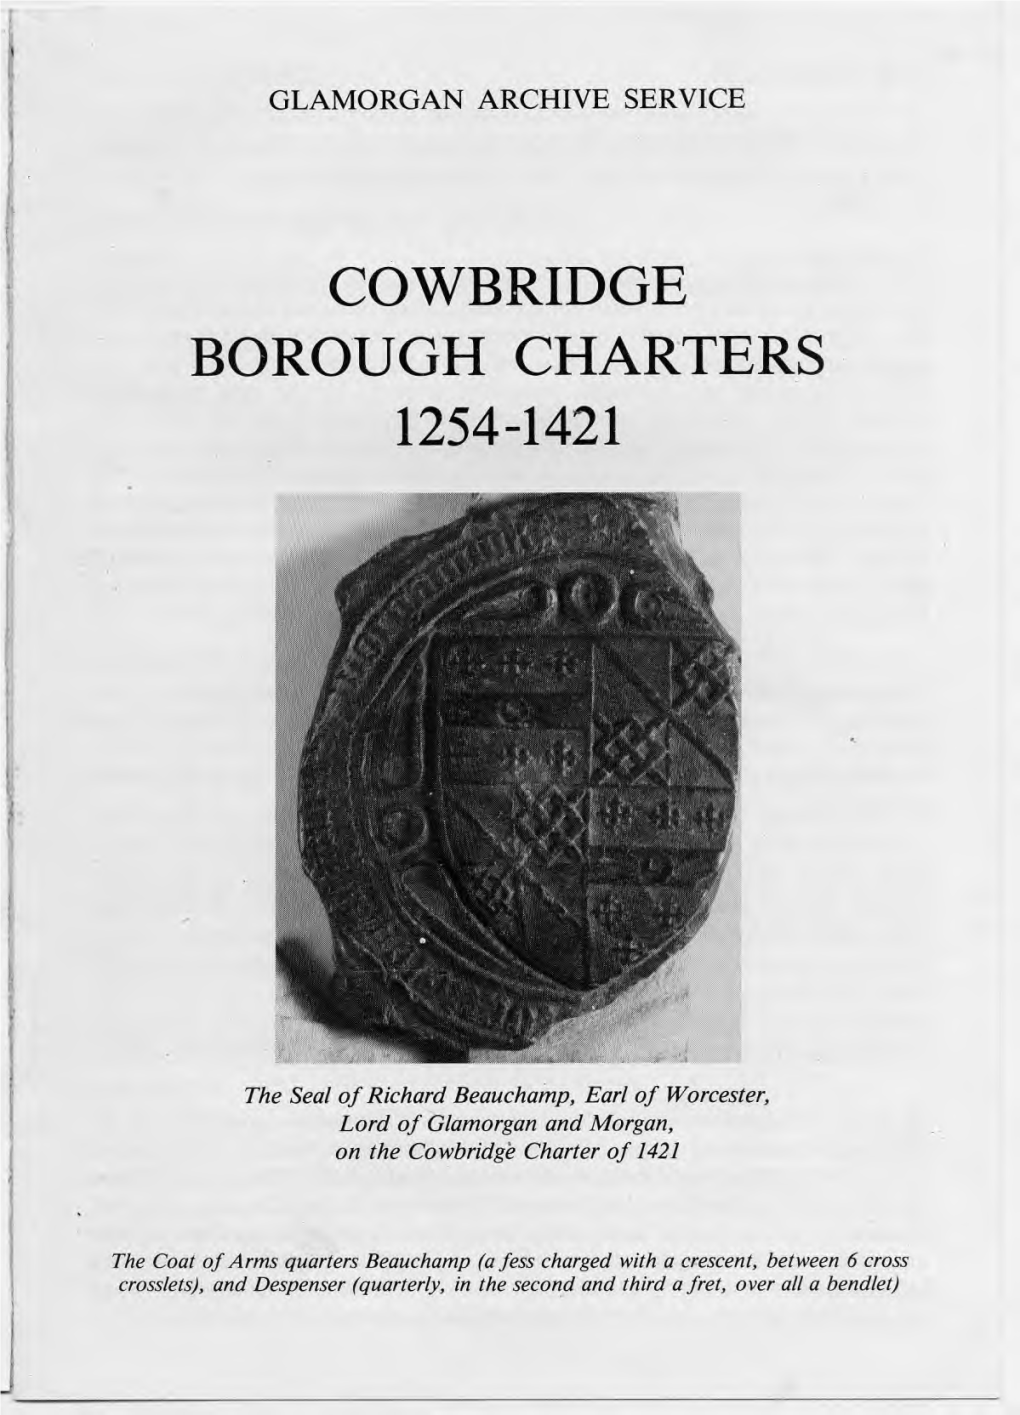 Cowbridge Borough Charters 1254-1421